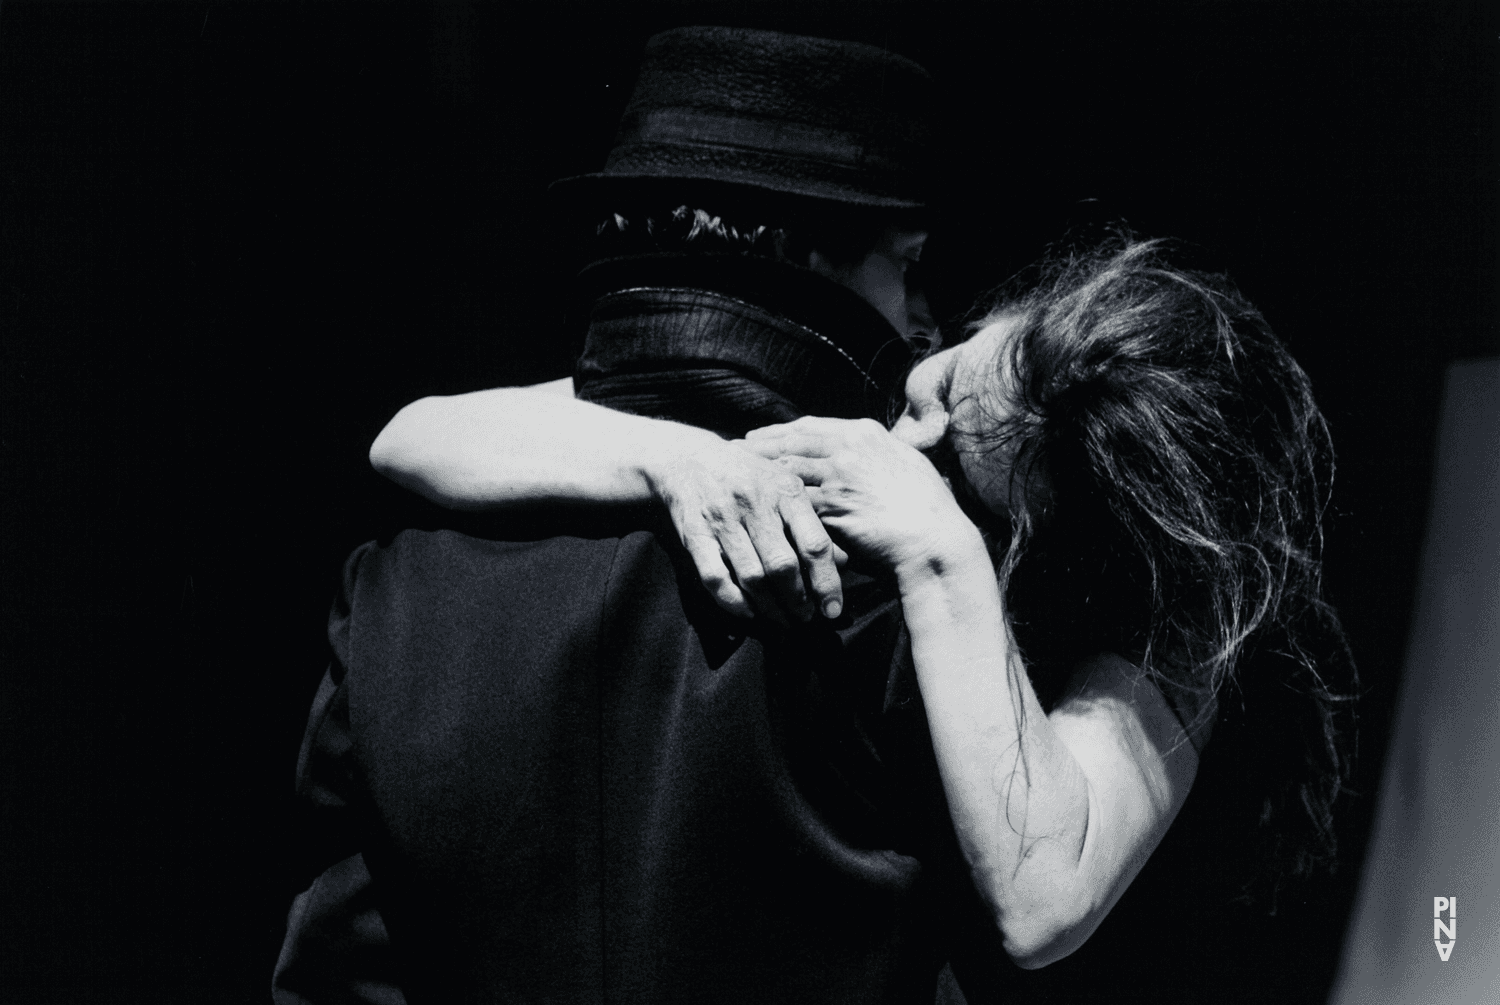 Josephine Ann Endicott in “Come Dance With Me” by Pina Bausch at Schauspielhaus Wuppertal, Oct. 8, 2008